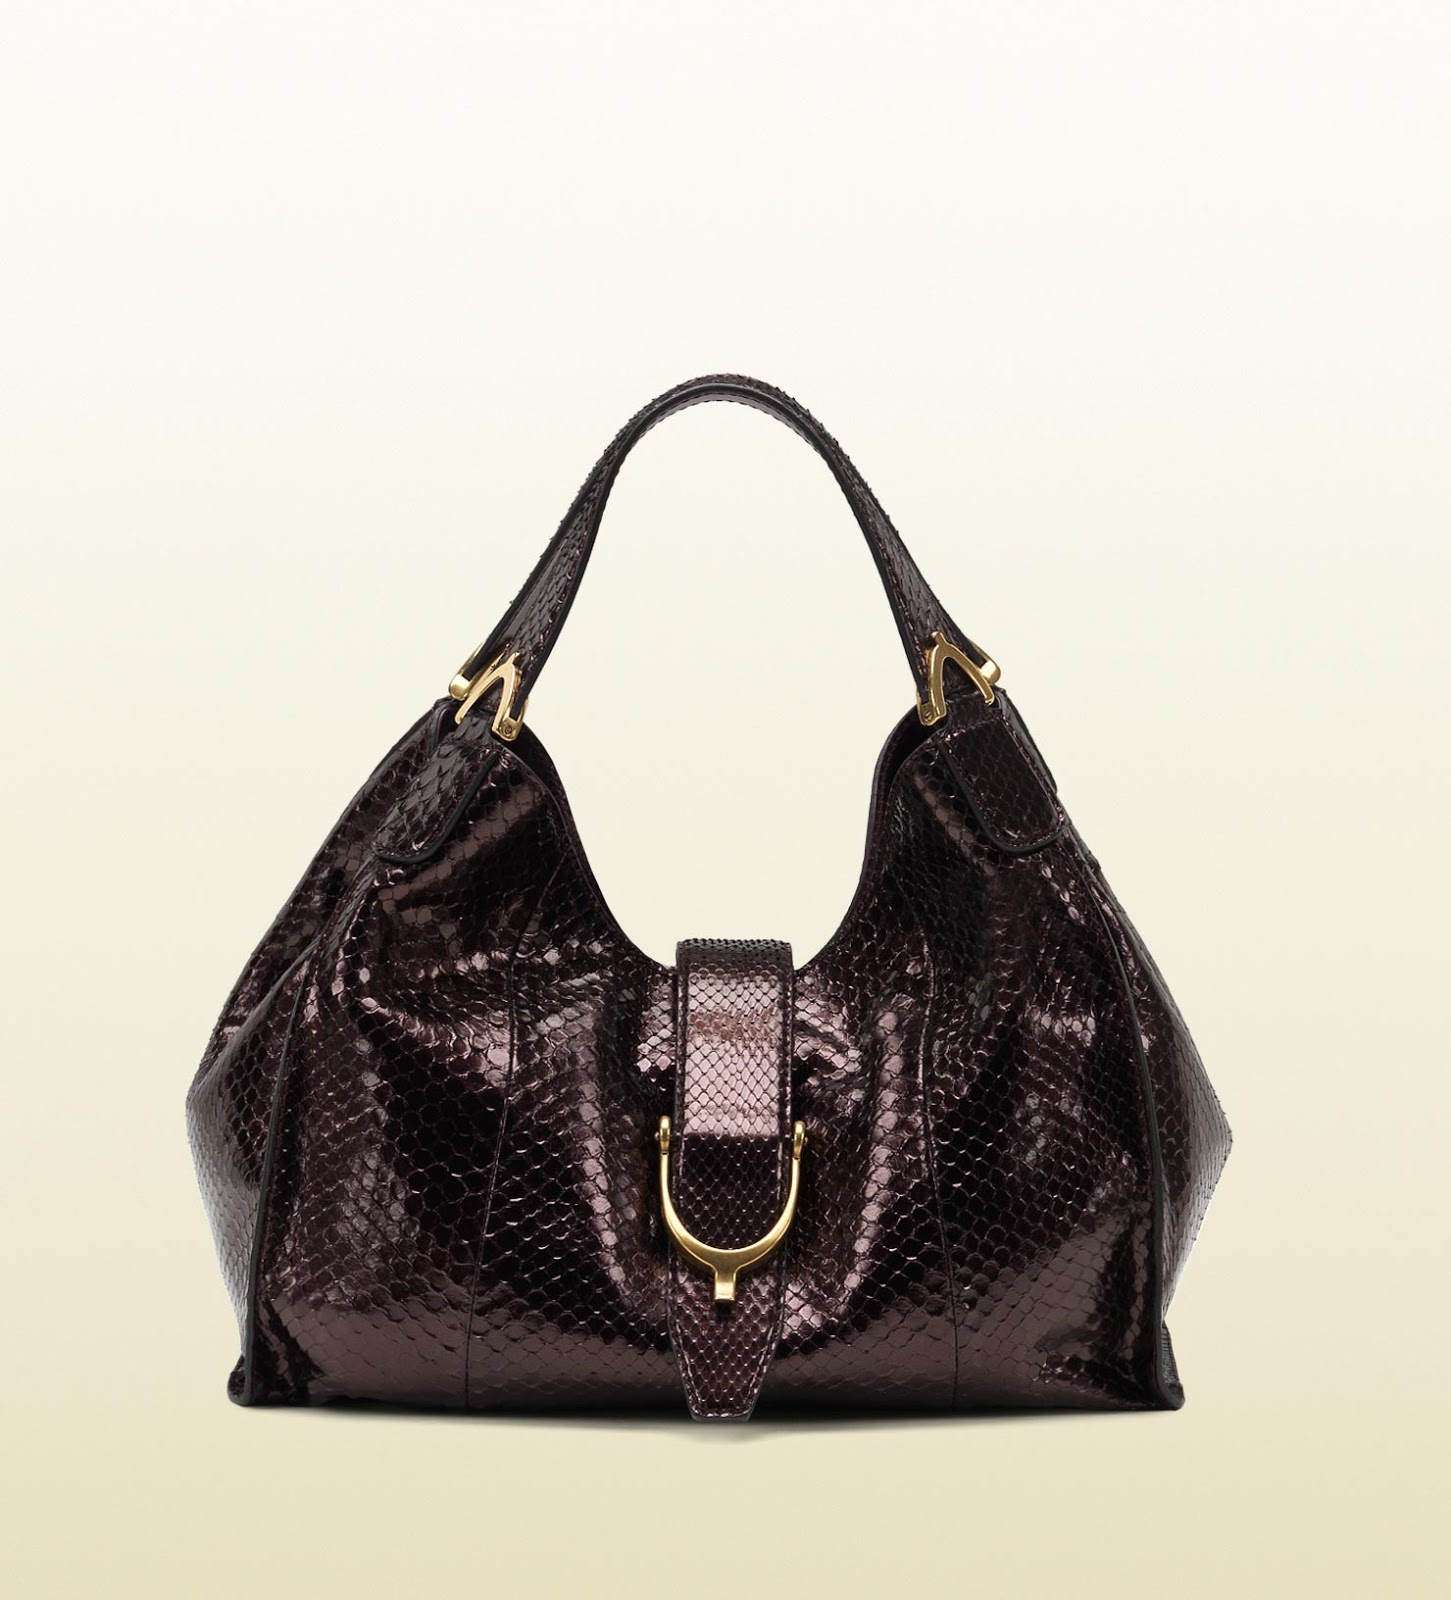 Gucci+Handbags+For+Women+2013+02.jpg